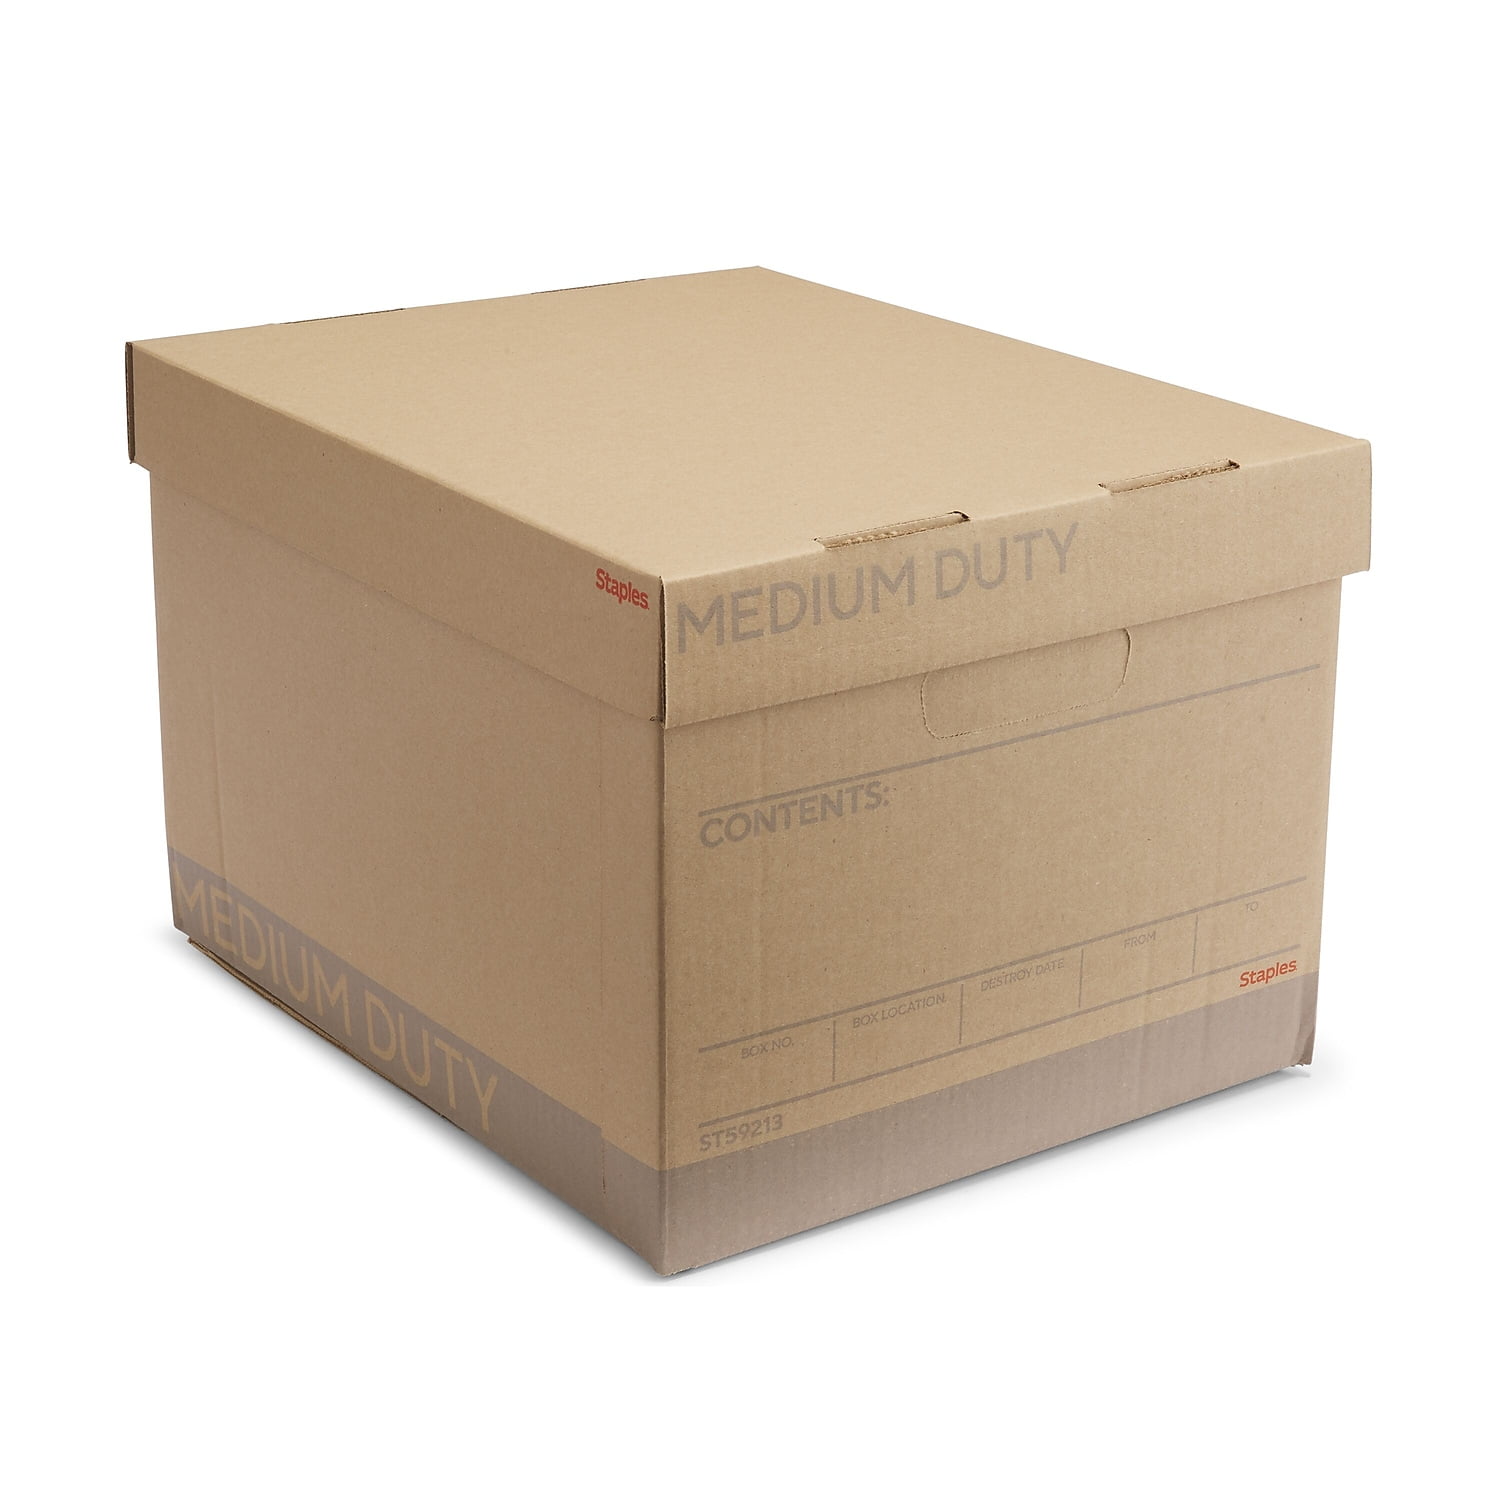 Staples Basic-duty 100% Recycled Storage Box, 4 Pack